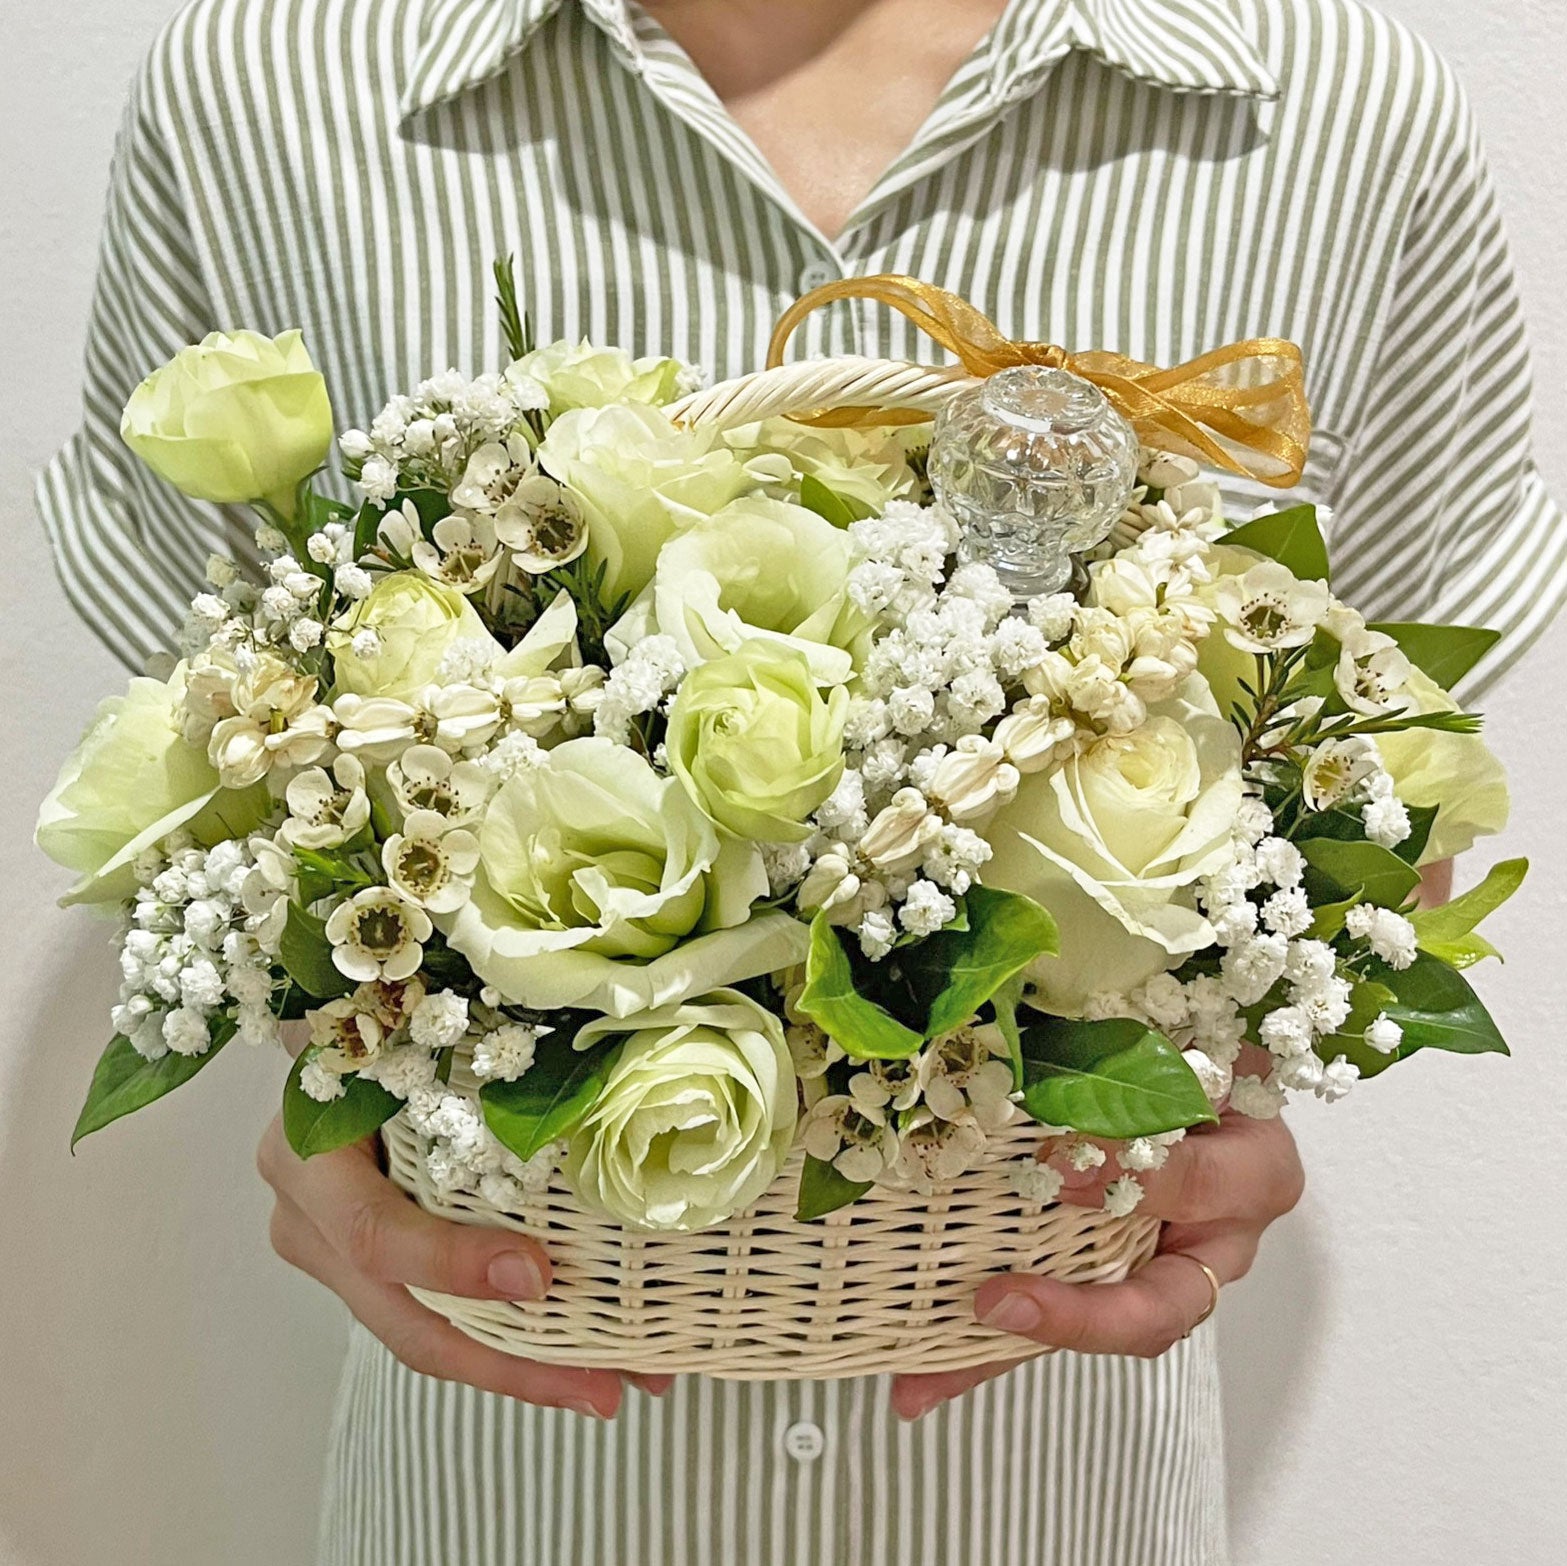 "Gratitude in Bloom" Basket of Flowers with Bottle of Scented Water กระเช้าน้ำอบ แด่คุณแม่ที่รัก